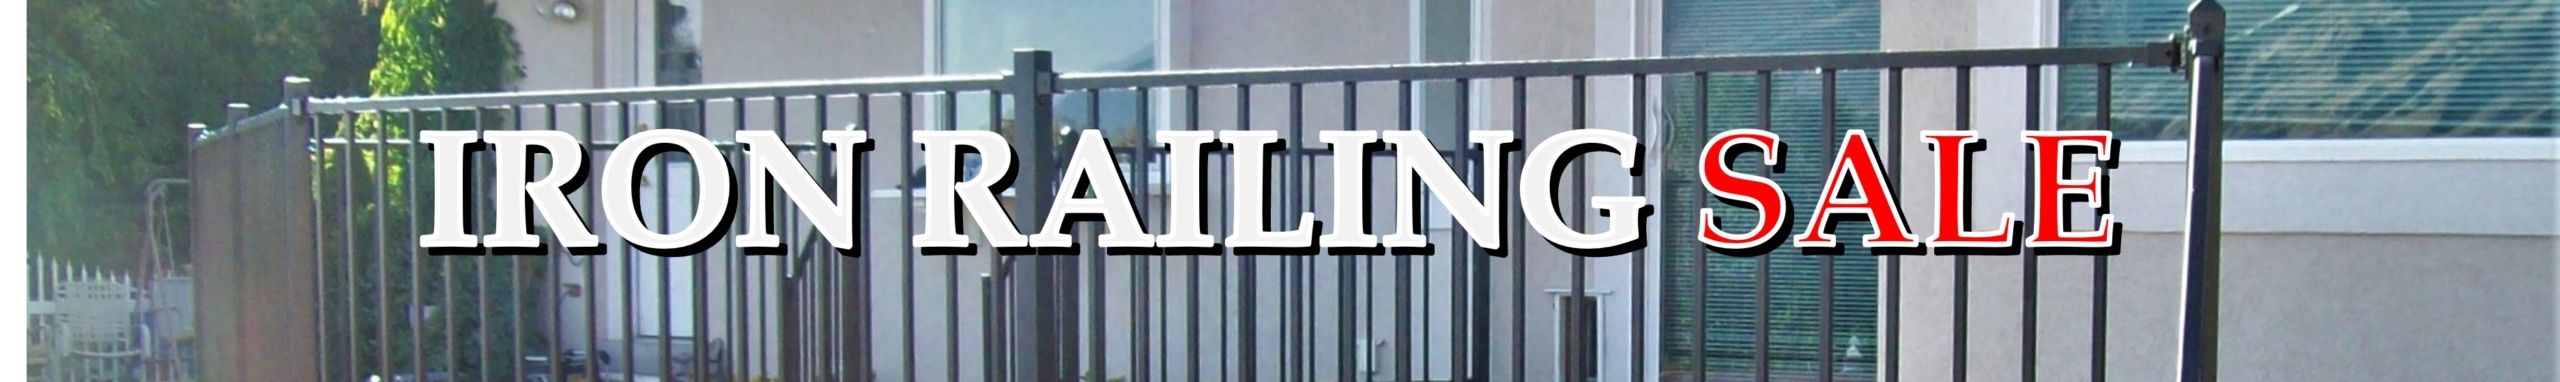 Iron railing sale